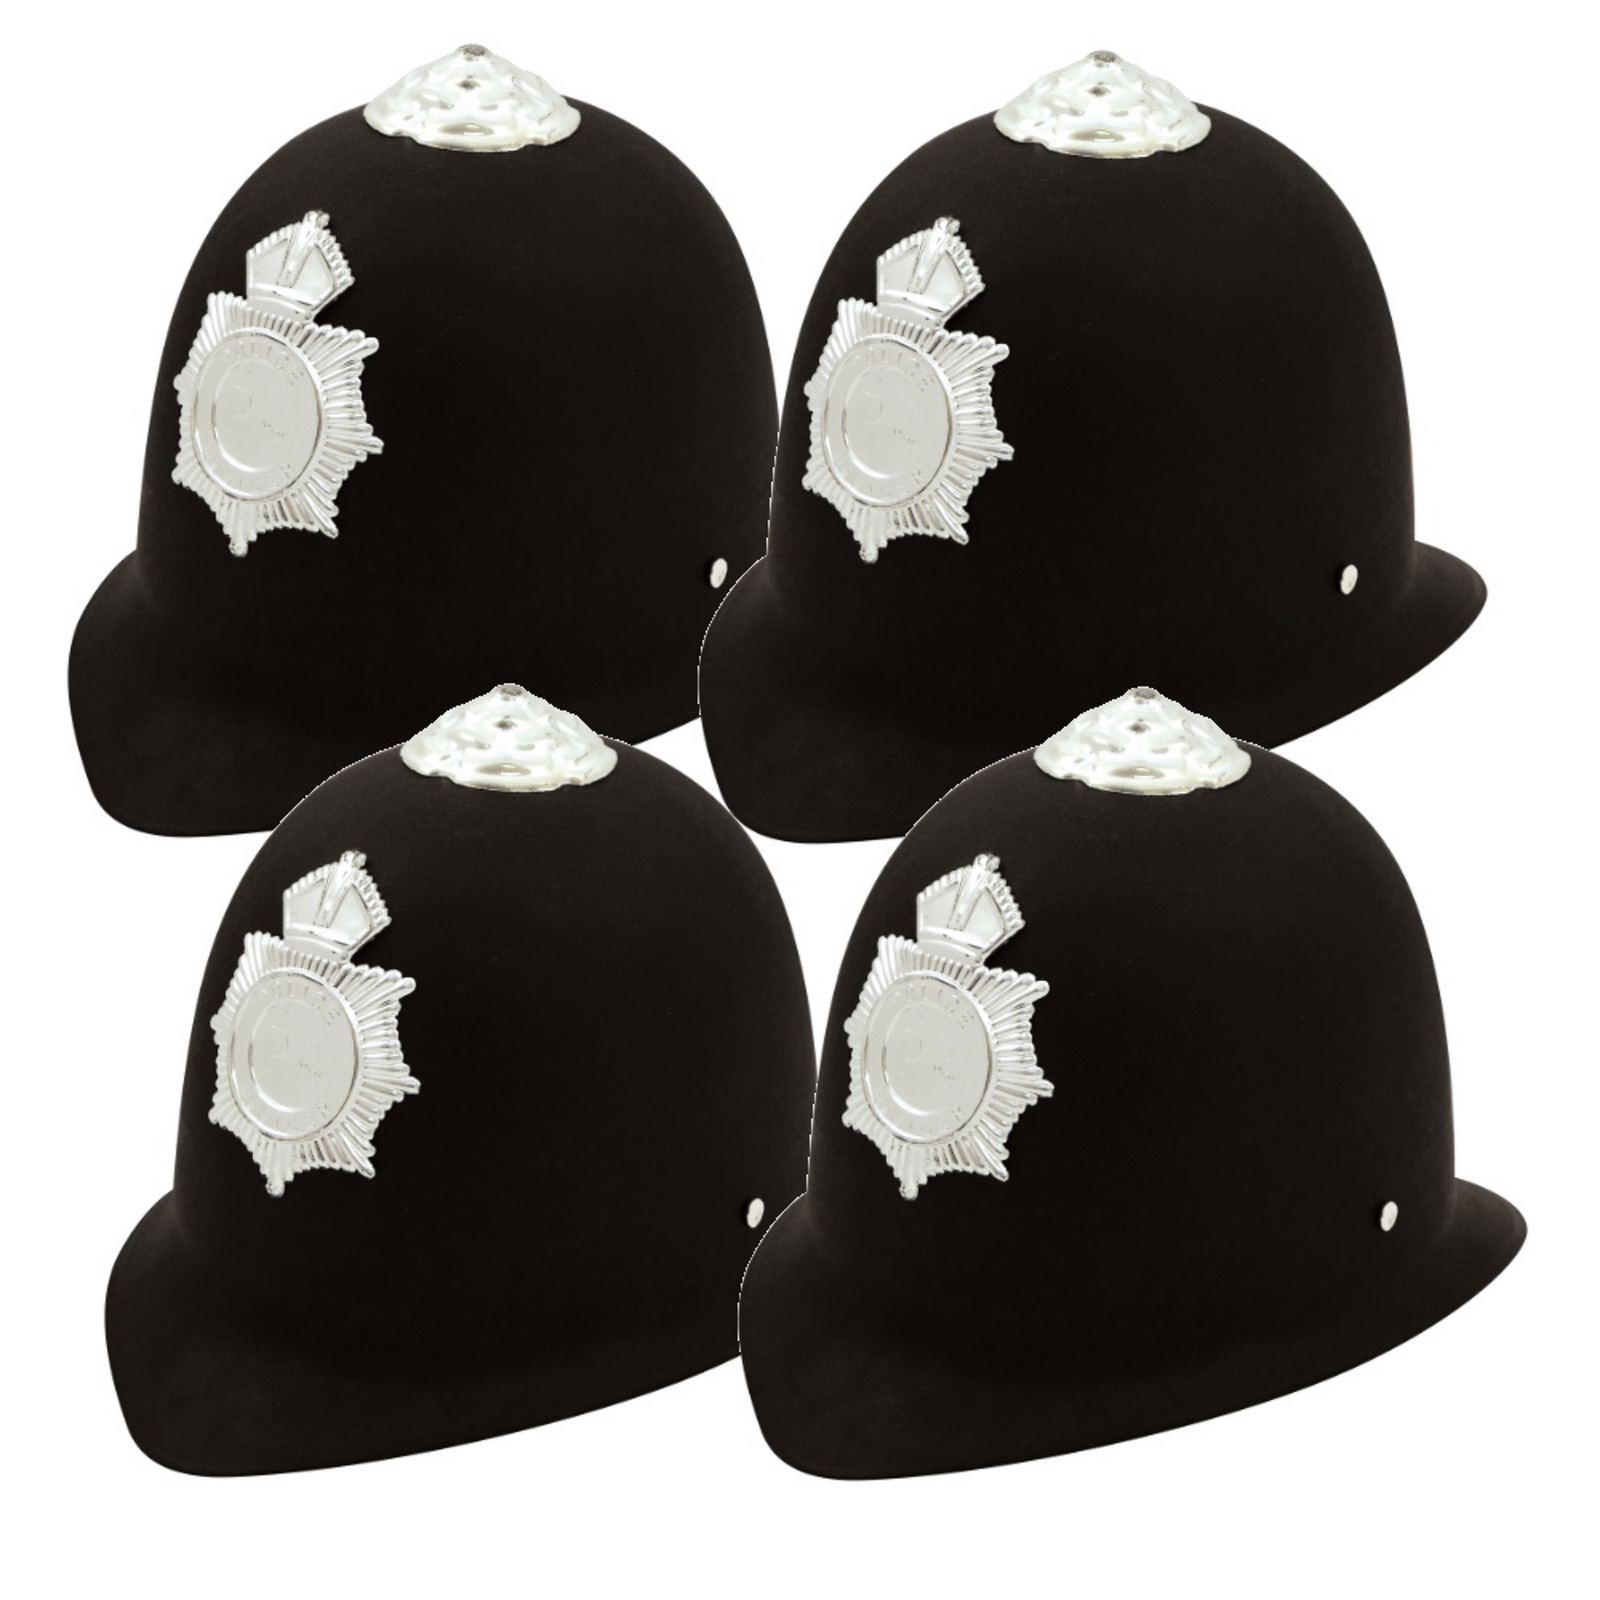 Police Helmets 